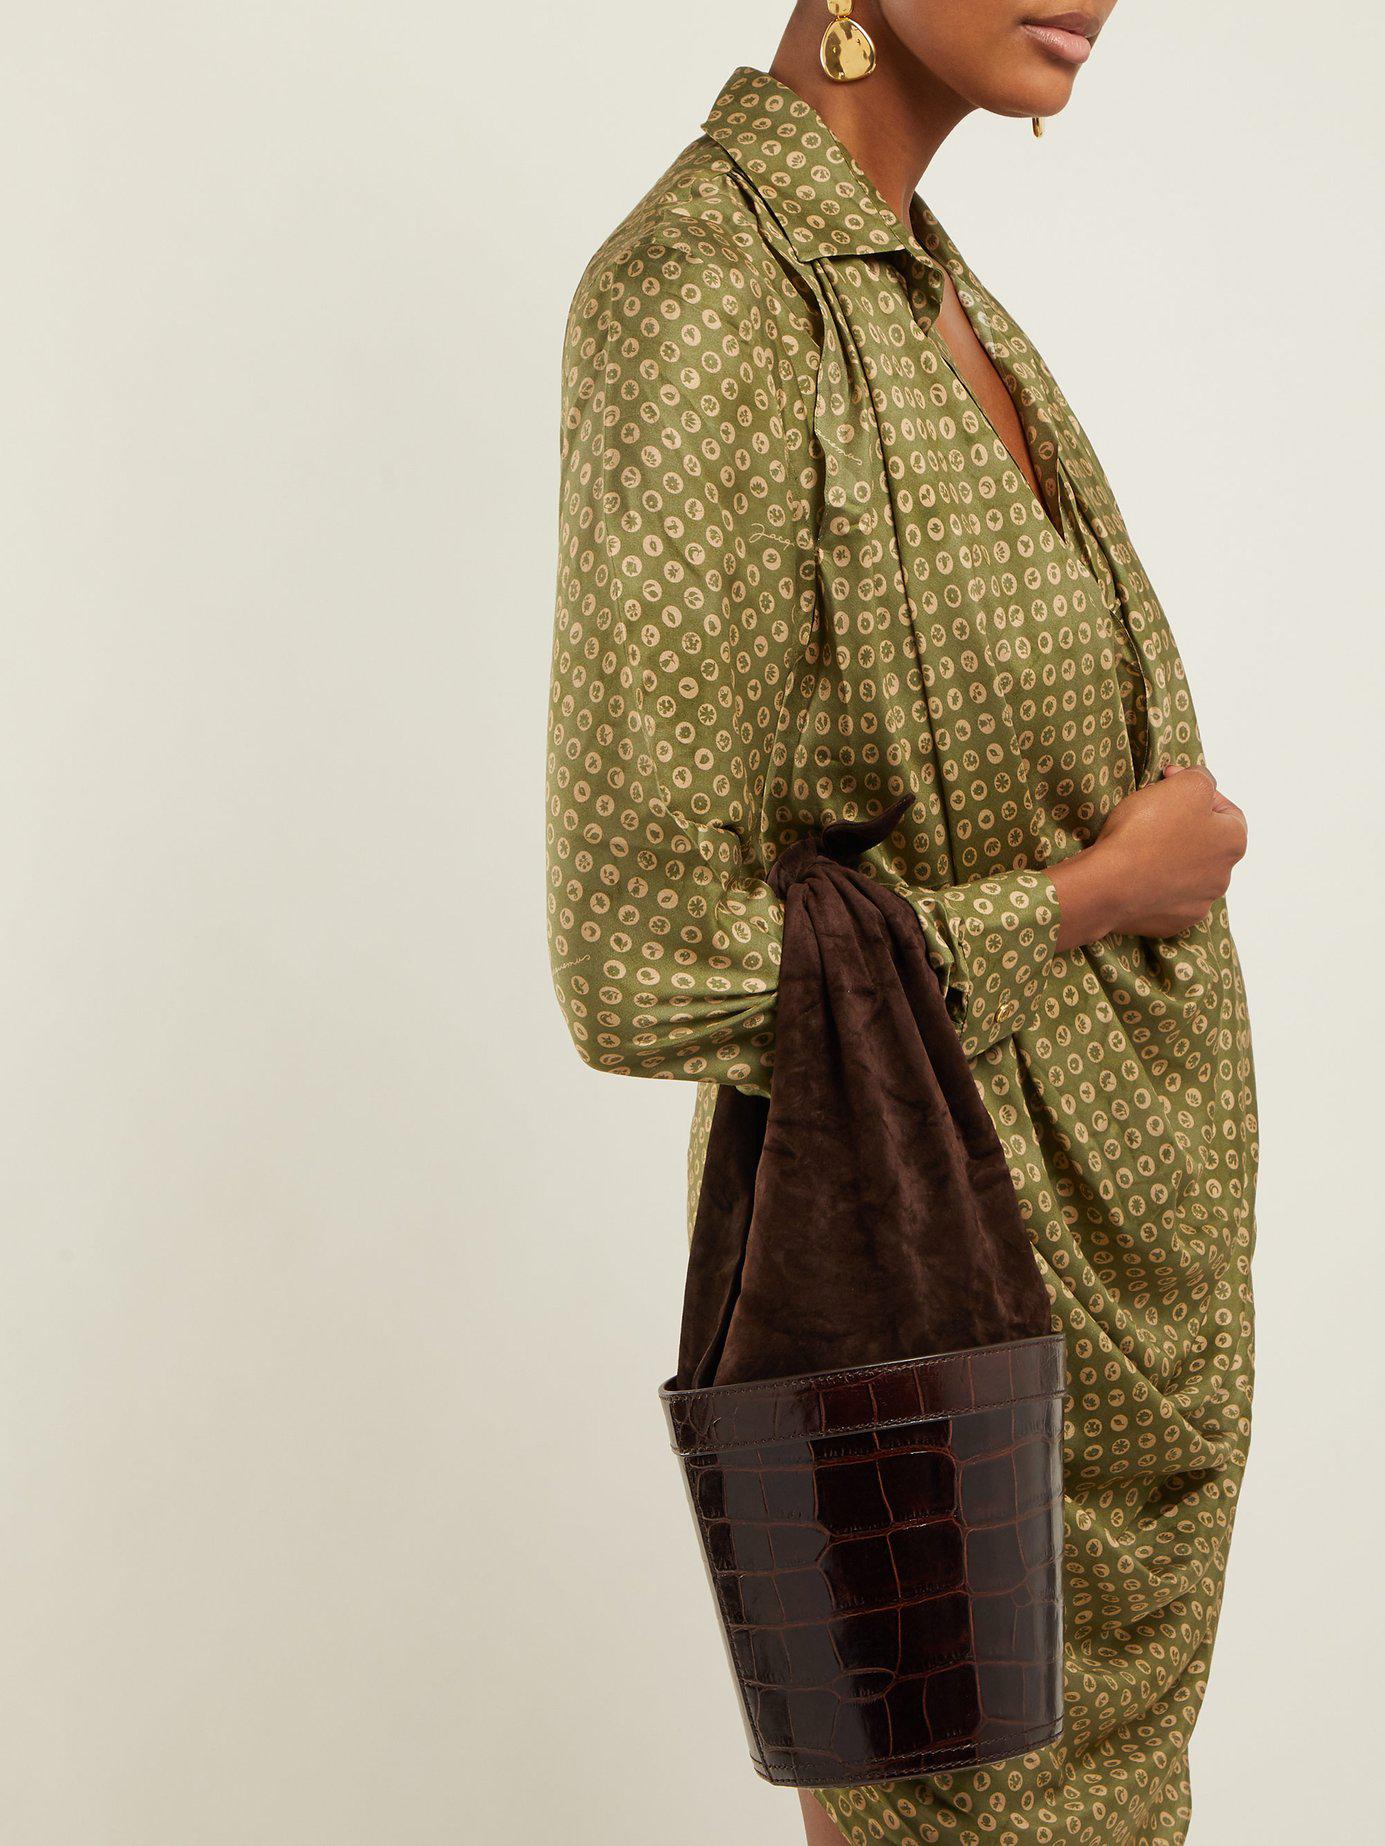 STAUD Britt Crocodile Effect Leather Bucket Bag in Brown - Lyst